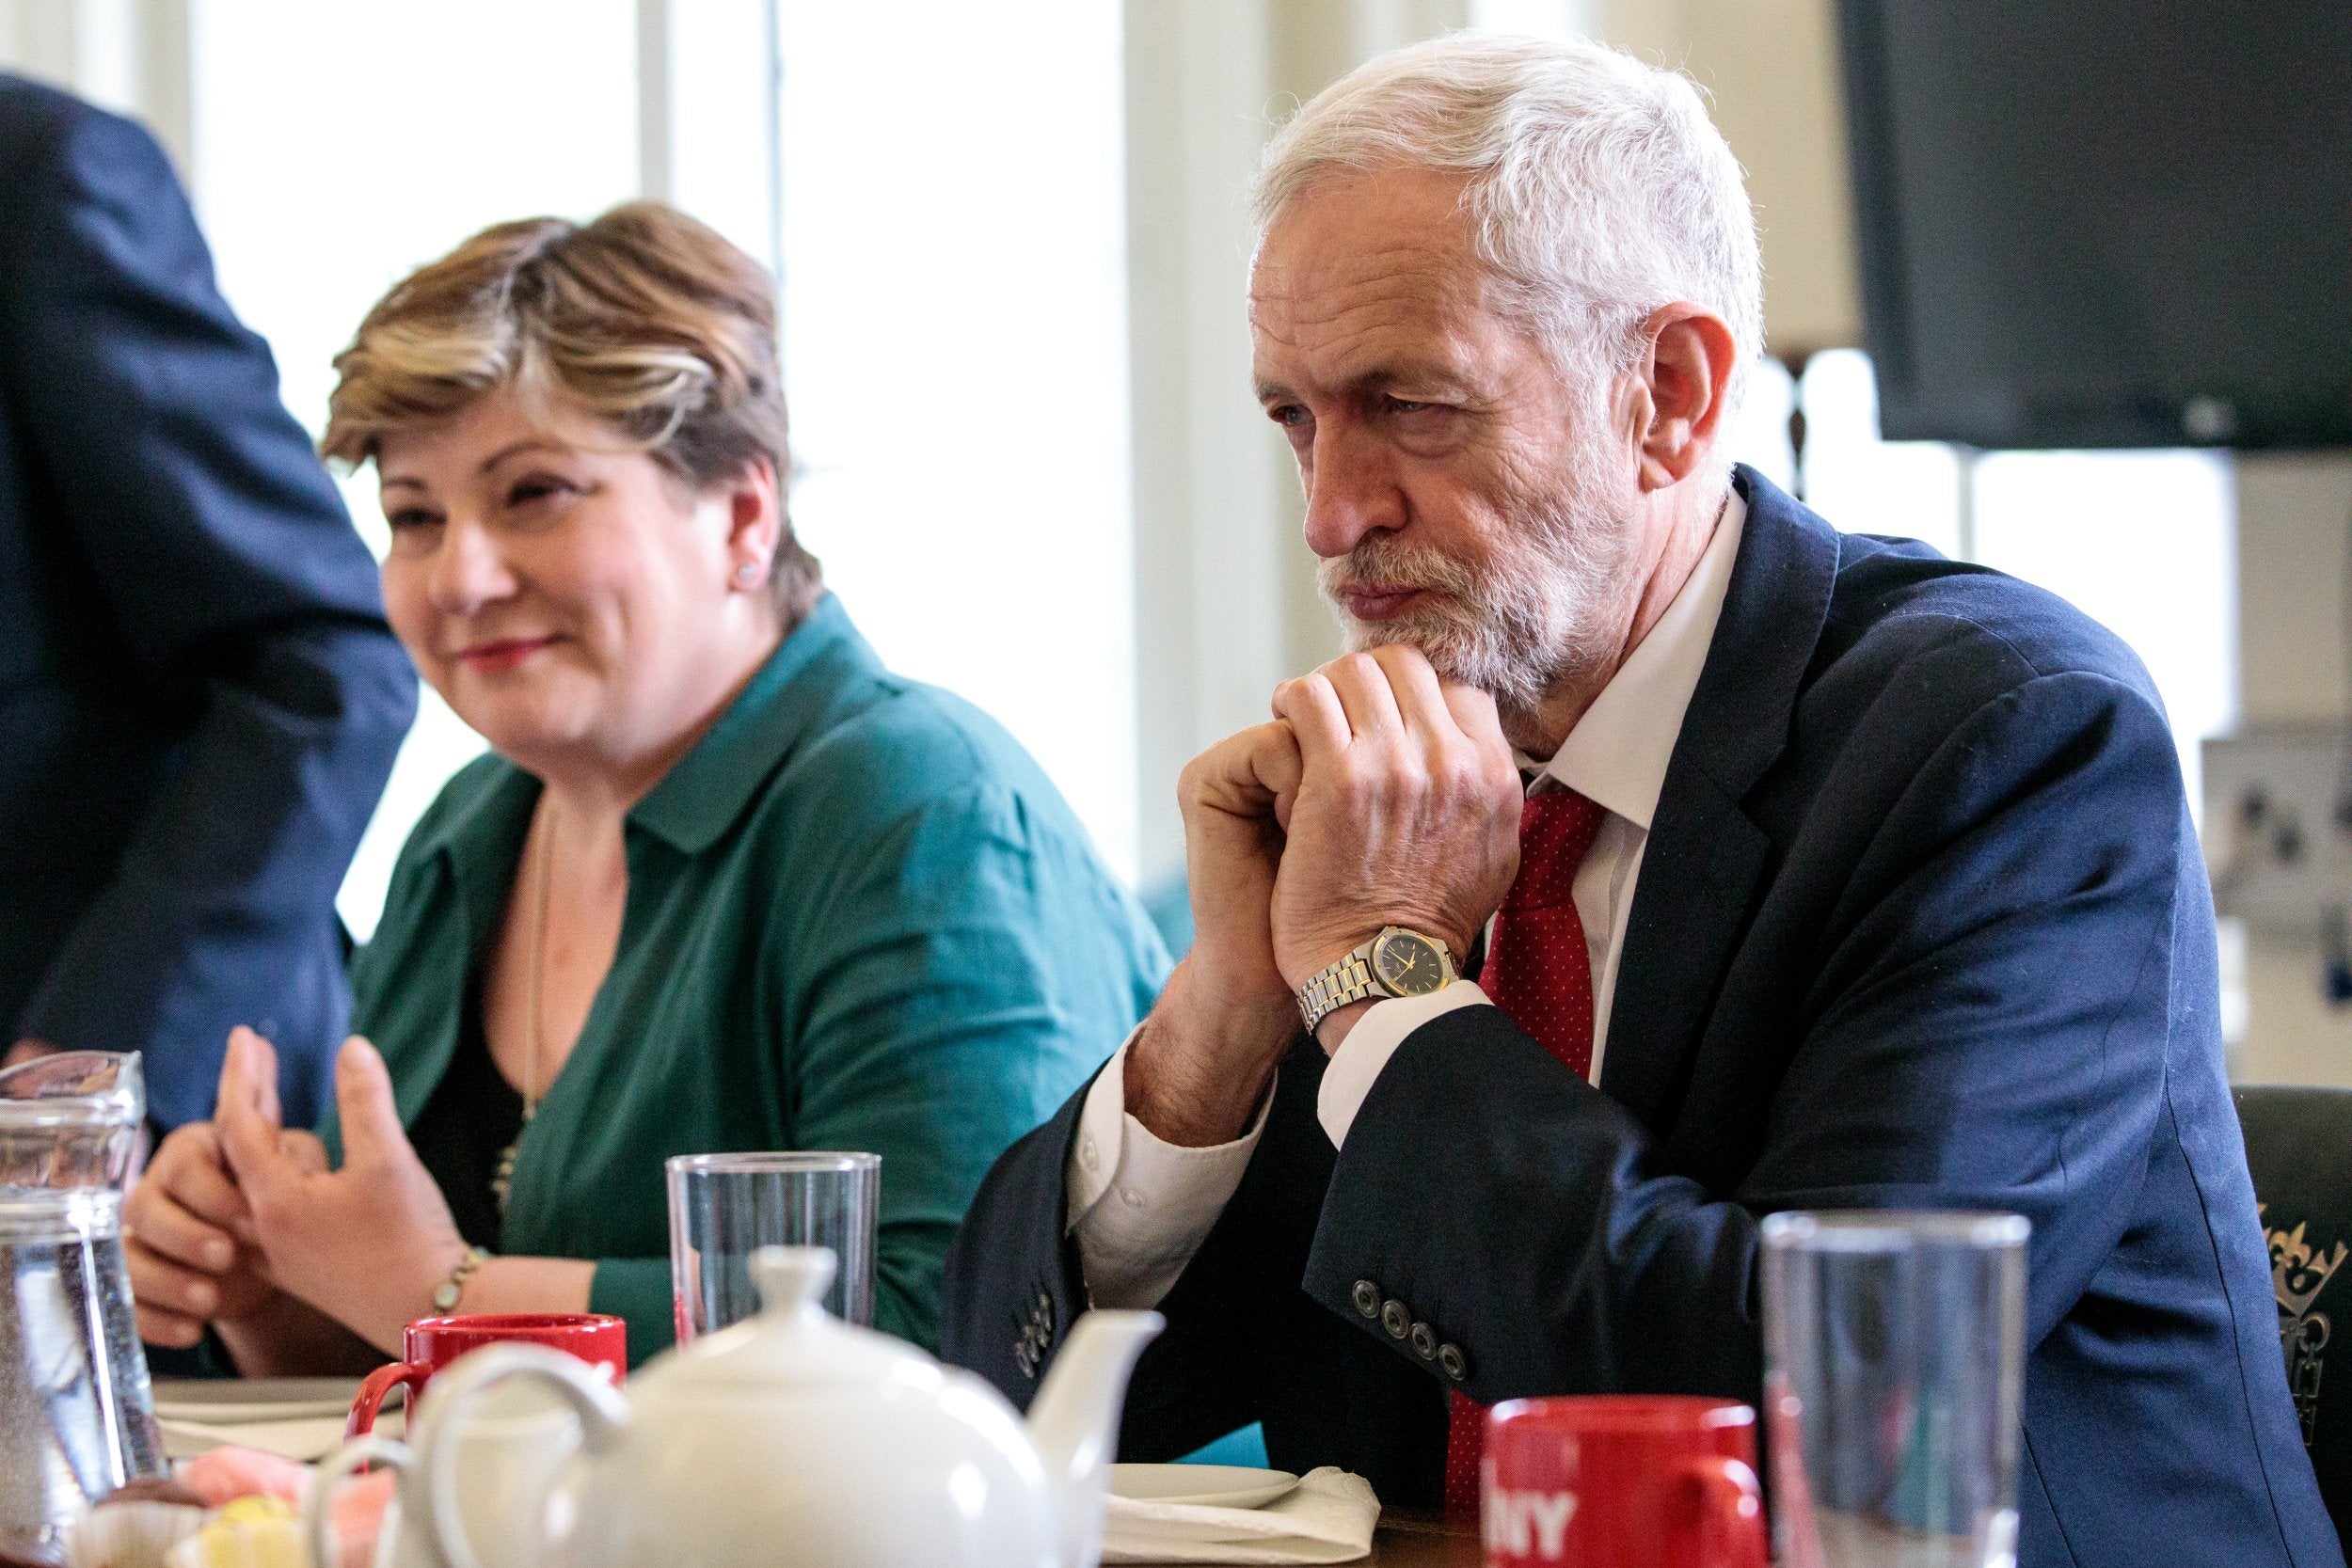 Emily Thornberry with Jeremy Corbyn